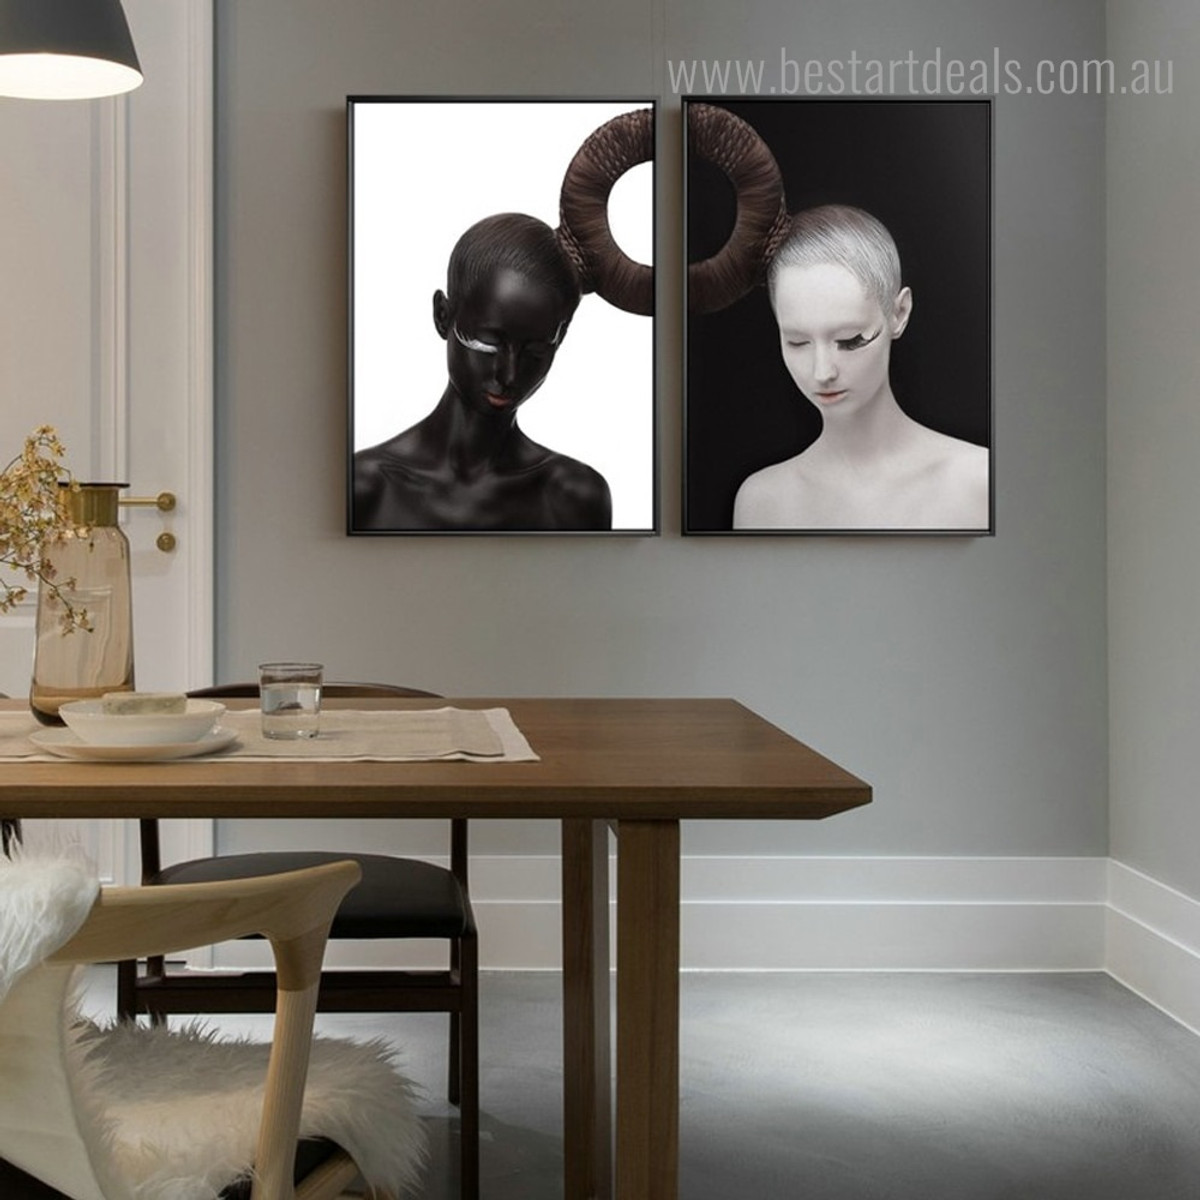 Circular Hair Style Figure Modern Framed Artwork Image Canvas Print for Room Wall Decor